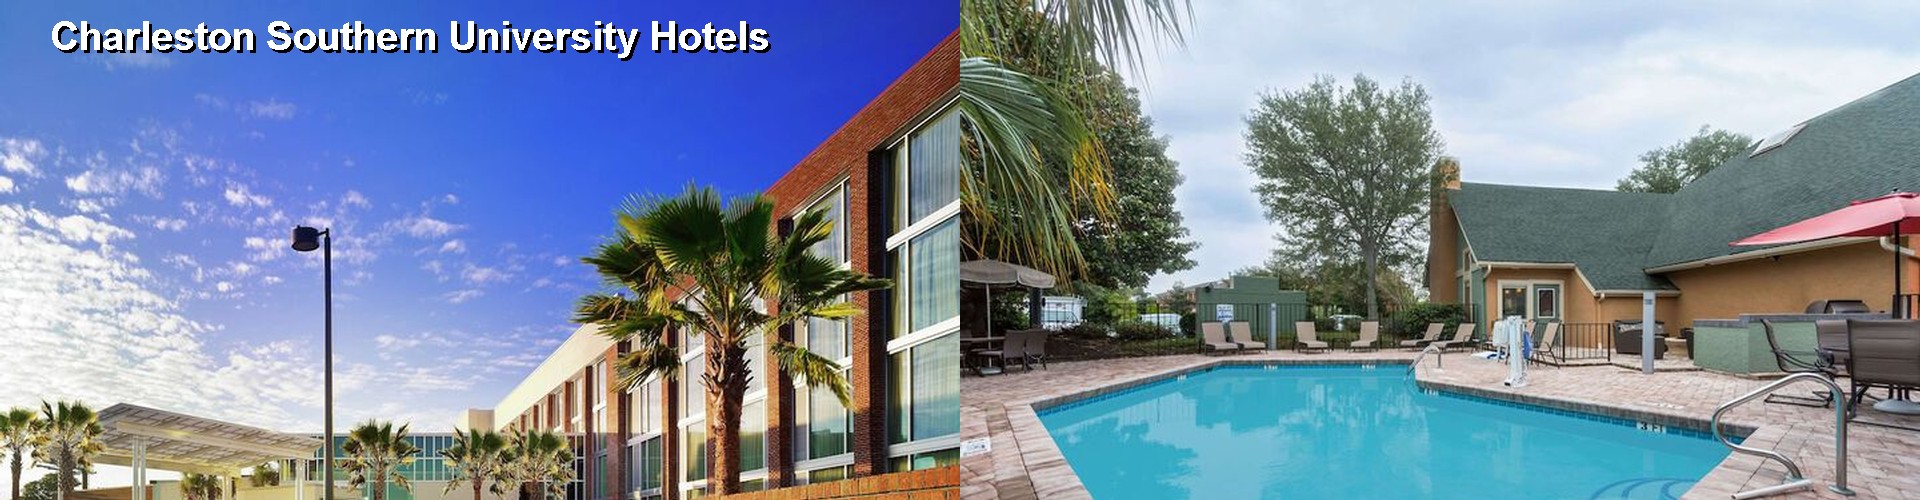 5 Best Hotels near Charleston Southern University